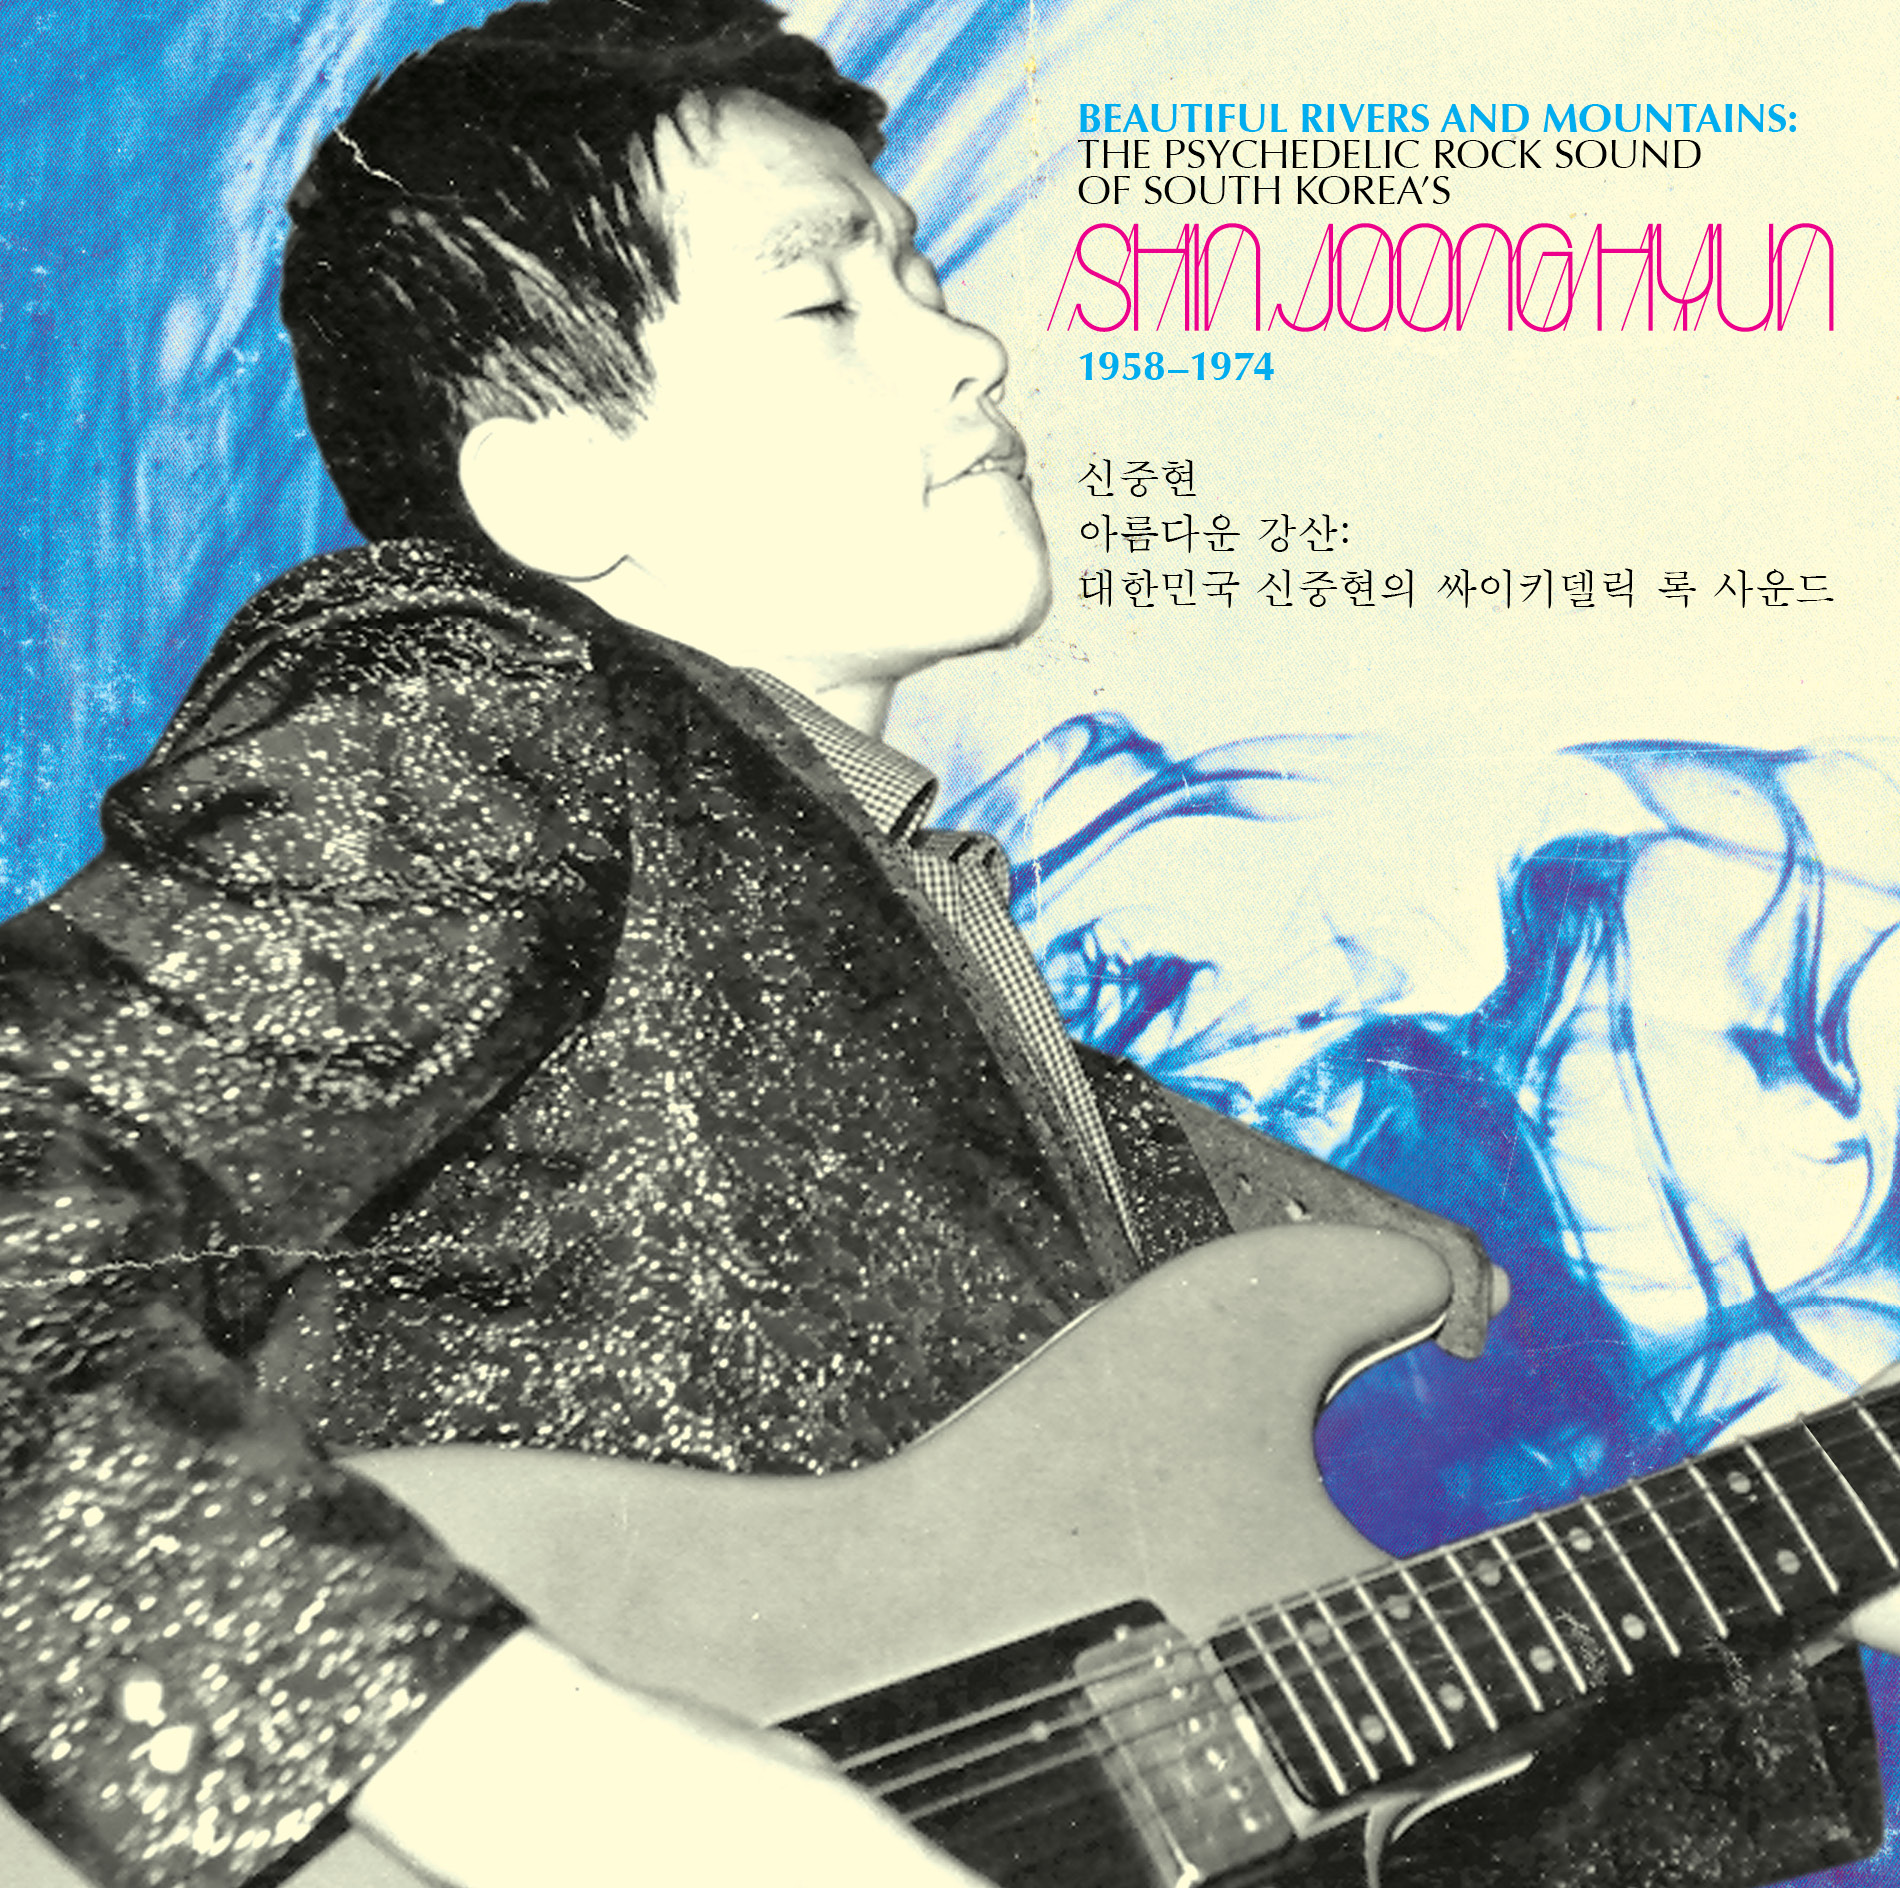 Image result for shin joong hyun godfather korean rock